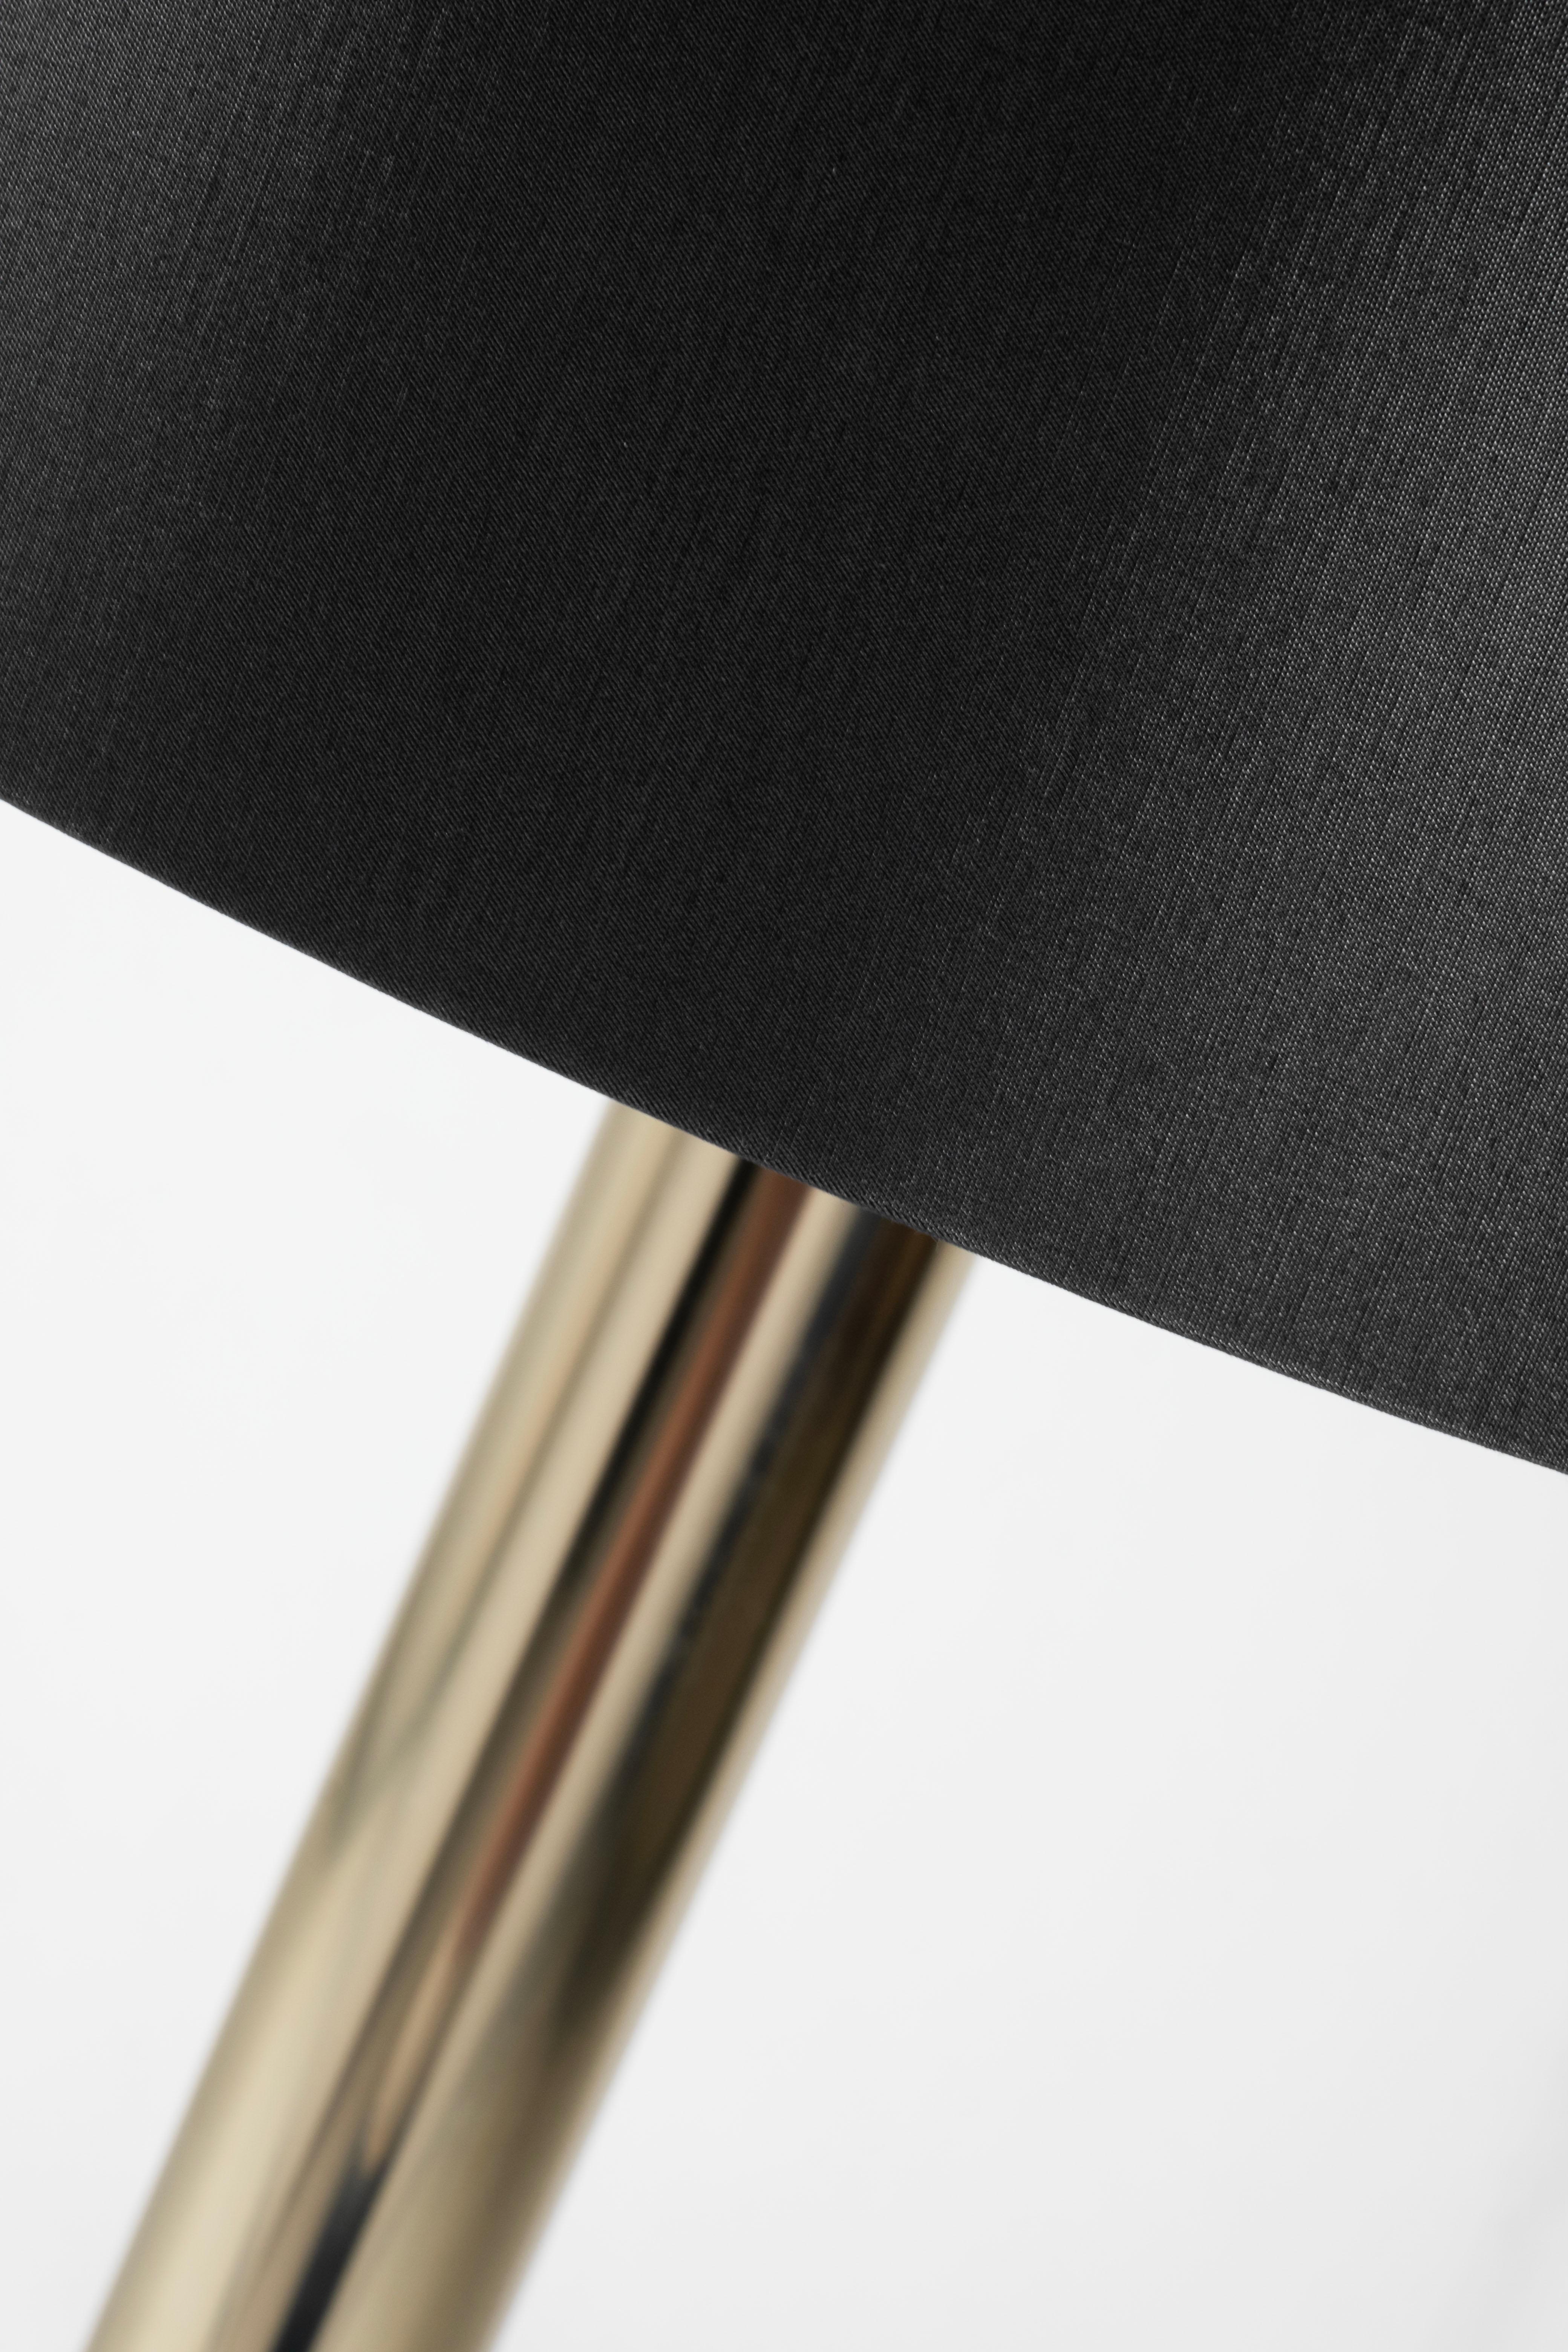 Modern Gau Floor Lamp Stainless Black Shade Handmade in Portugal by Greenapple For Sale 1